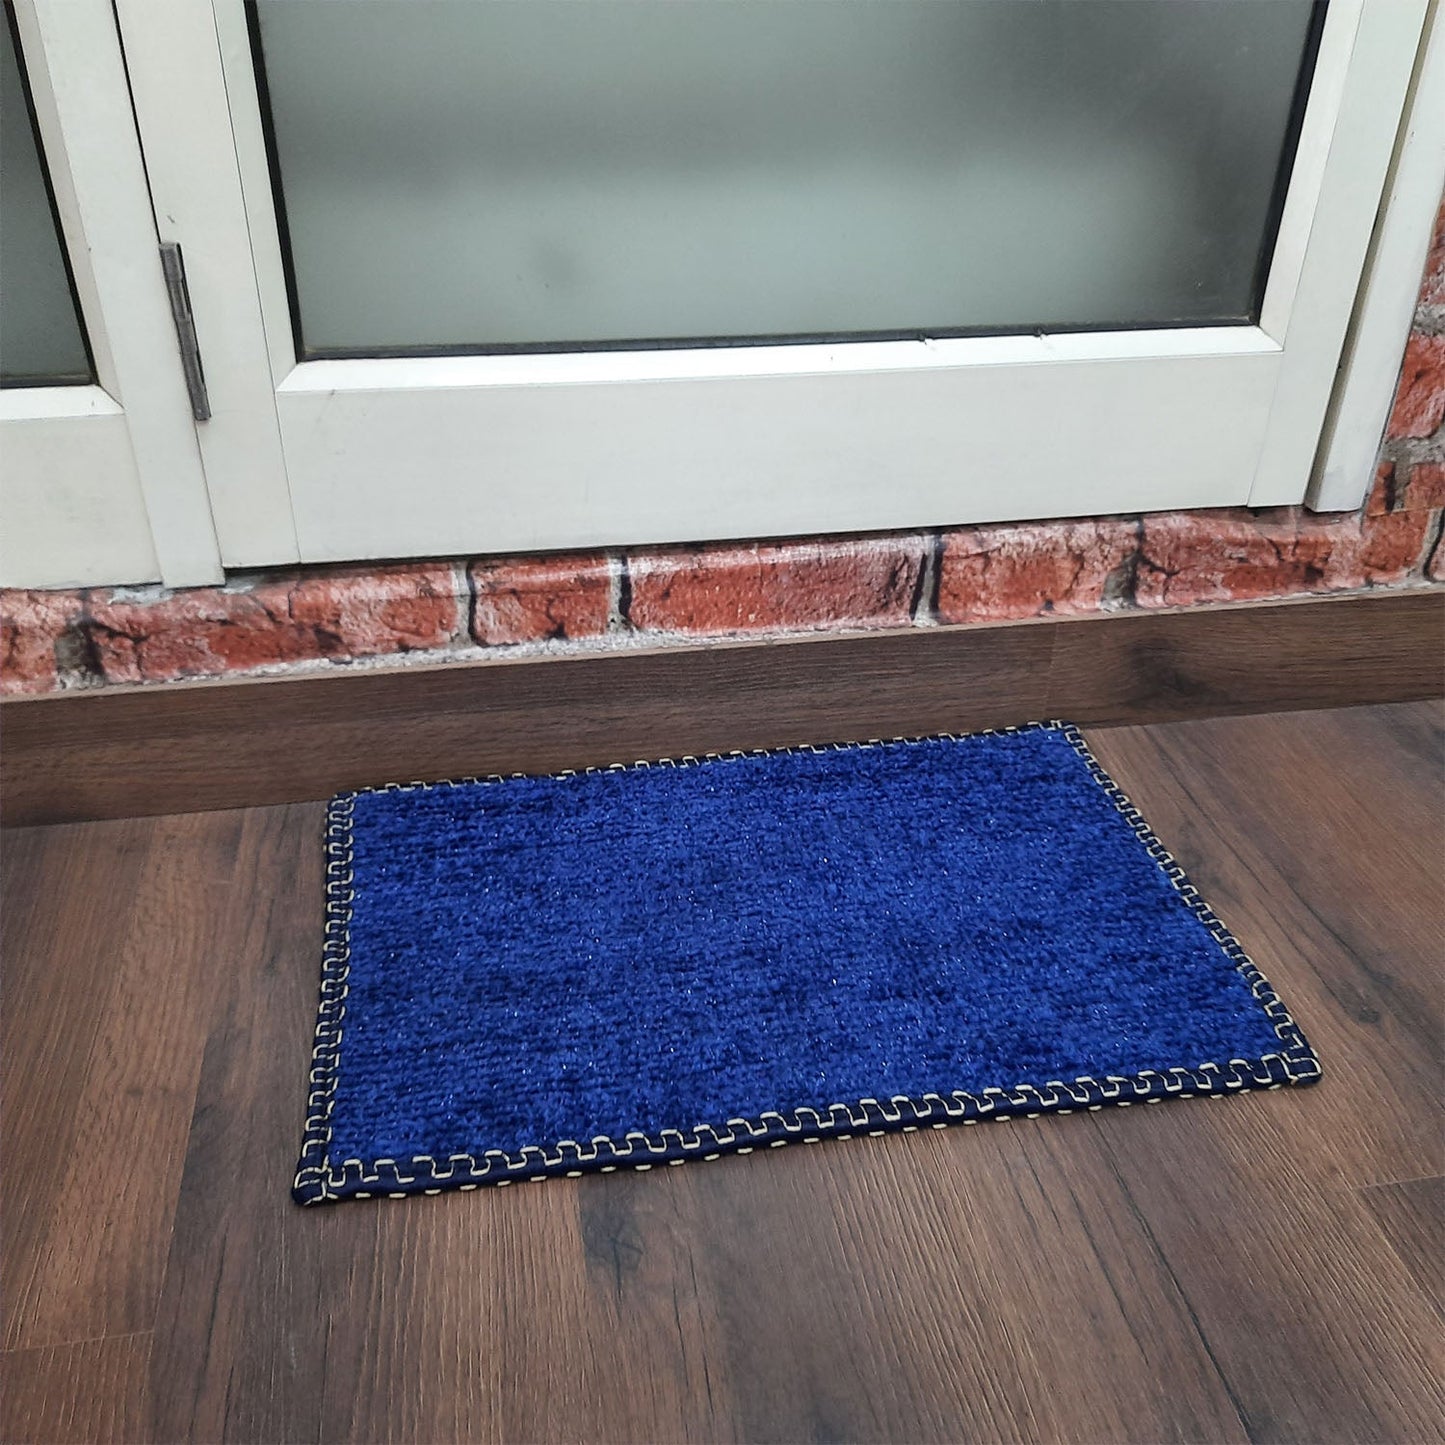 SET OF FOUR | Avioni SlipToGrip Universal Doormat | Blue, Size 35cm x 55cm | Anti Slip, Durable & Washable | Outdoor & Indoor